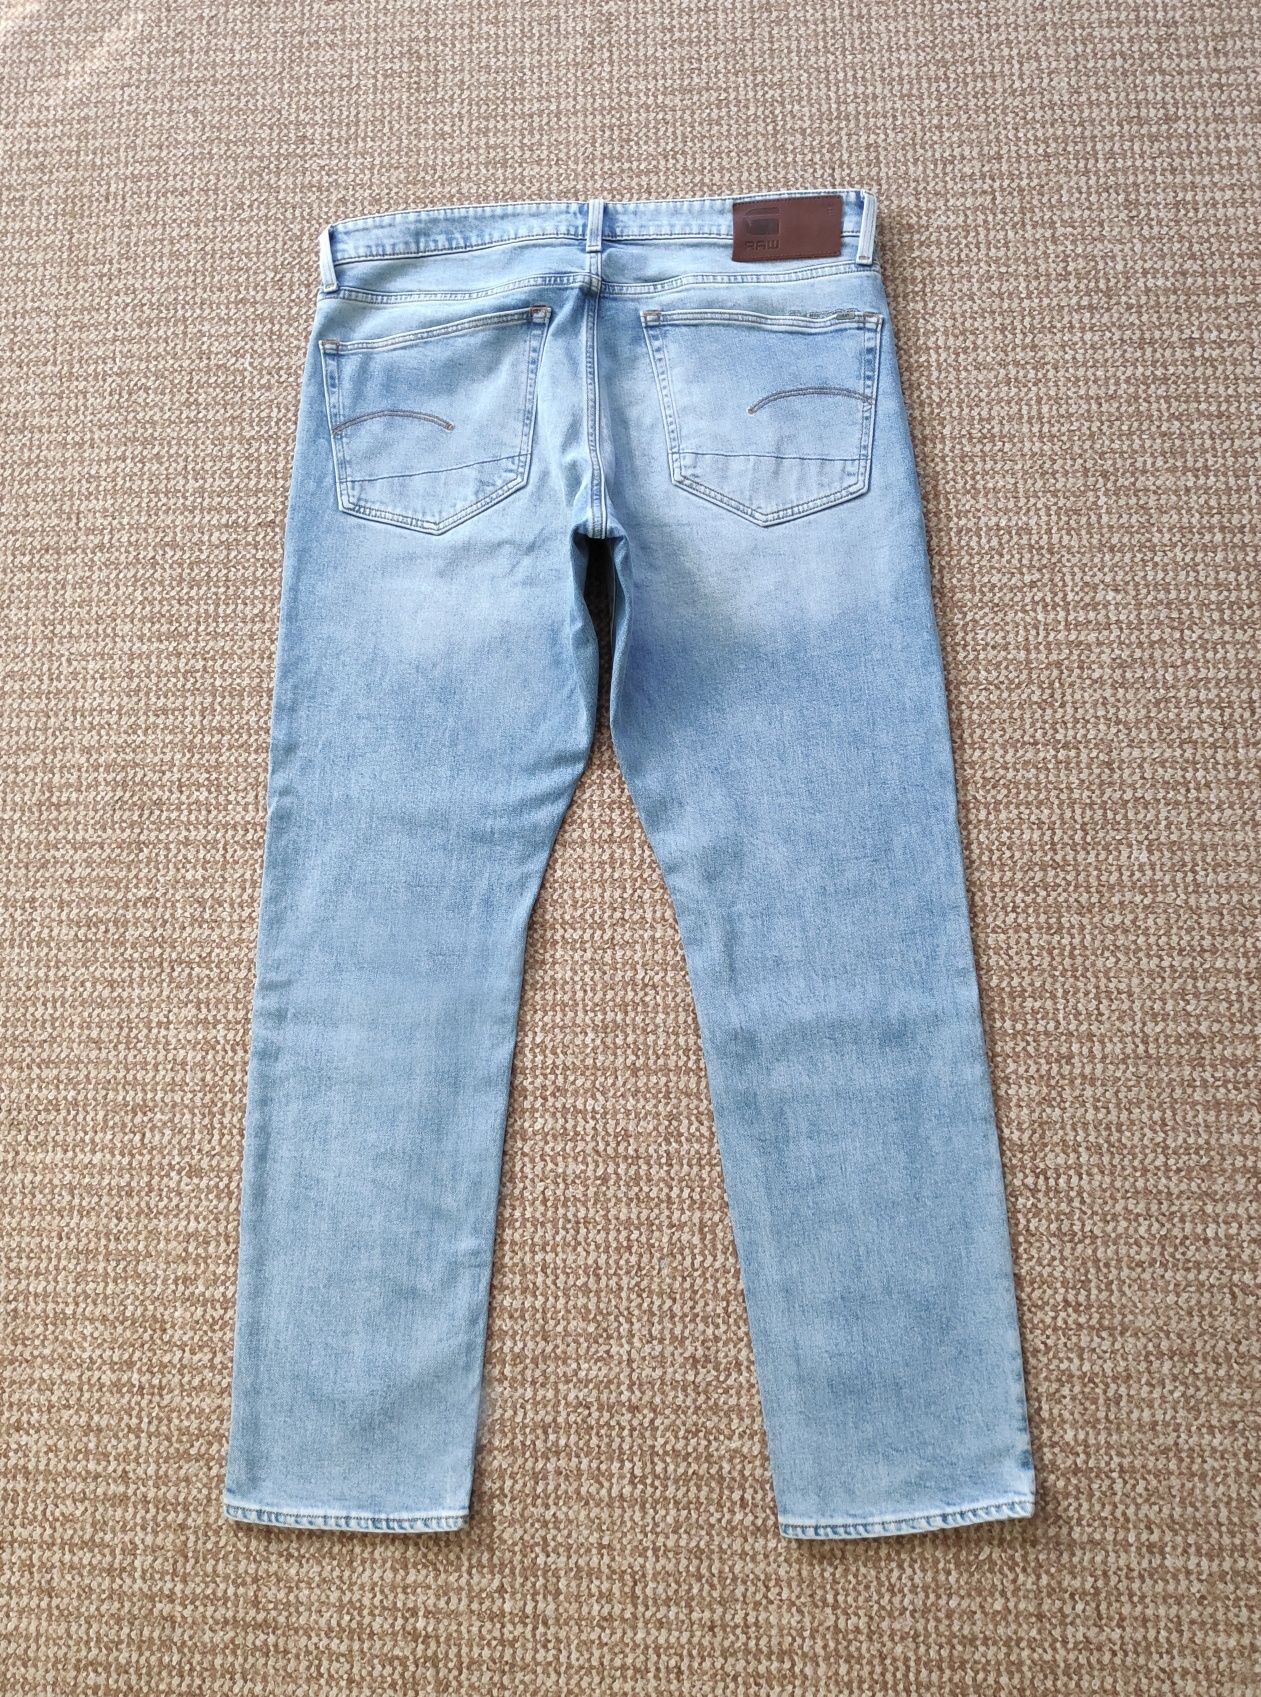 G-star raw 3301 straight tapered джинсы оригинал W36 L32